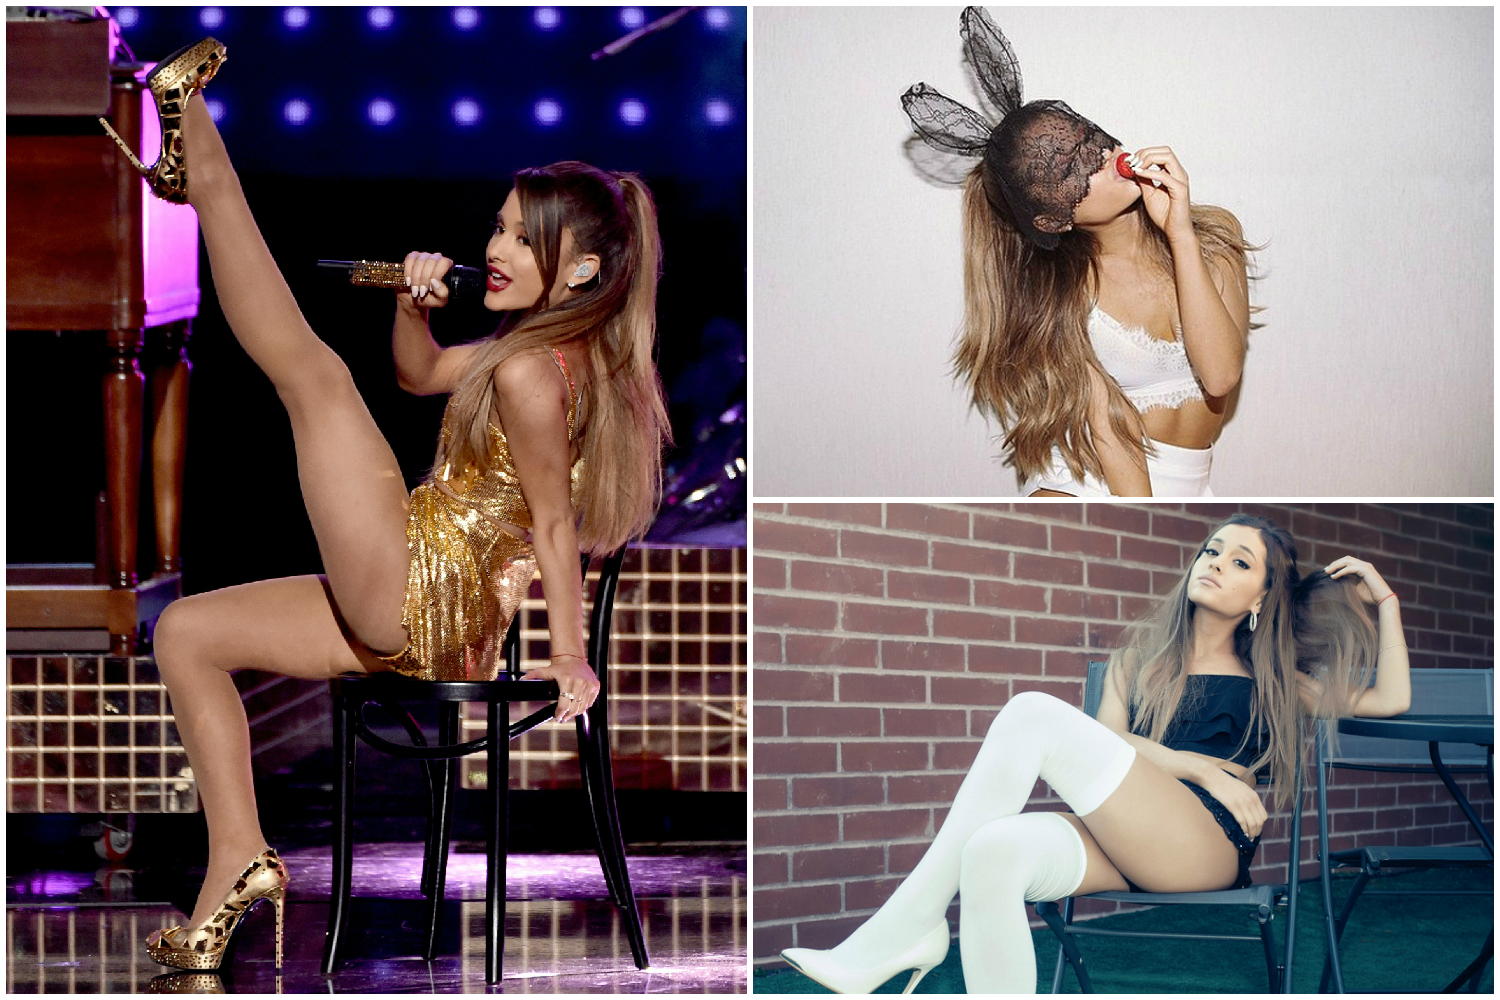 chris melchione recommends Ariana Grande Hot Ass